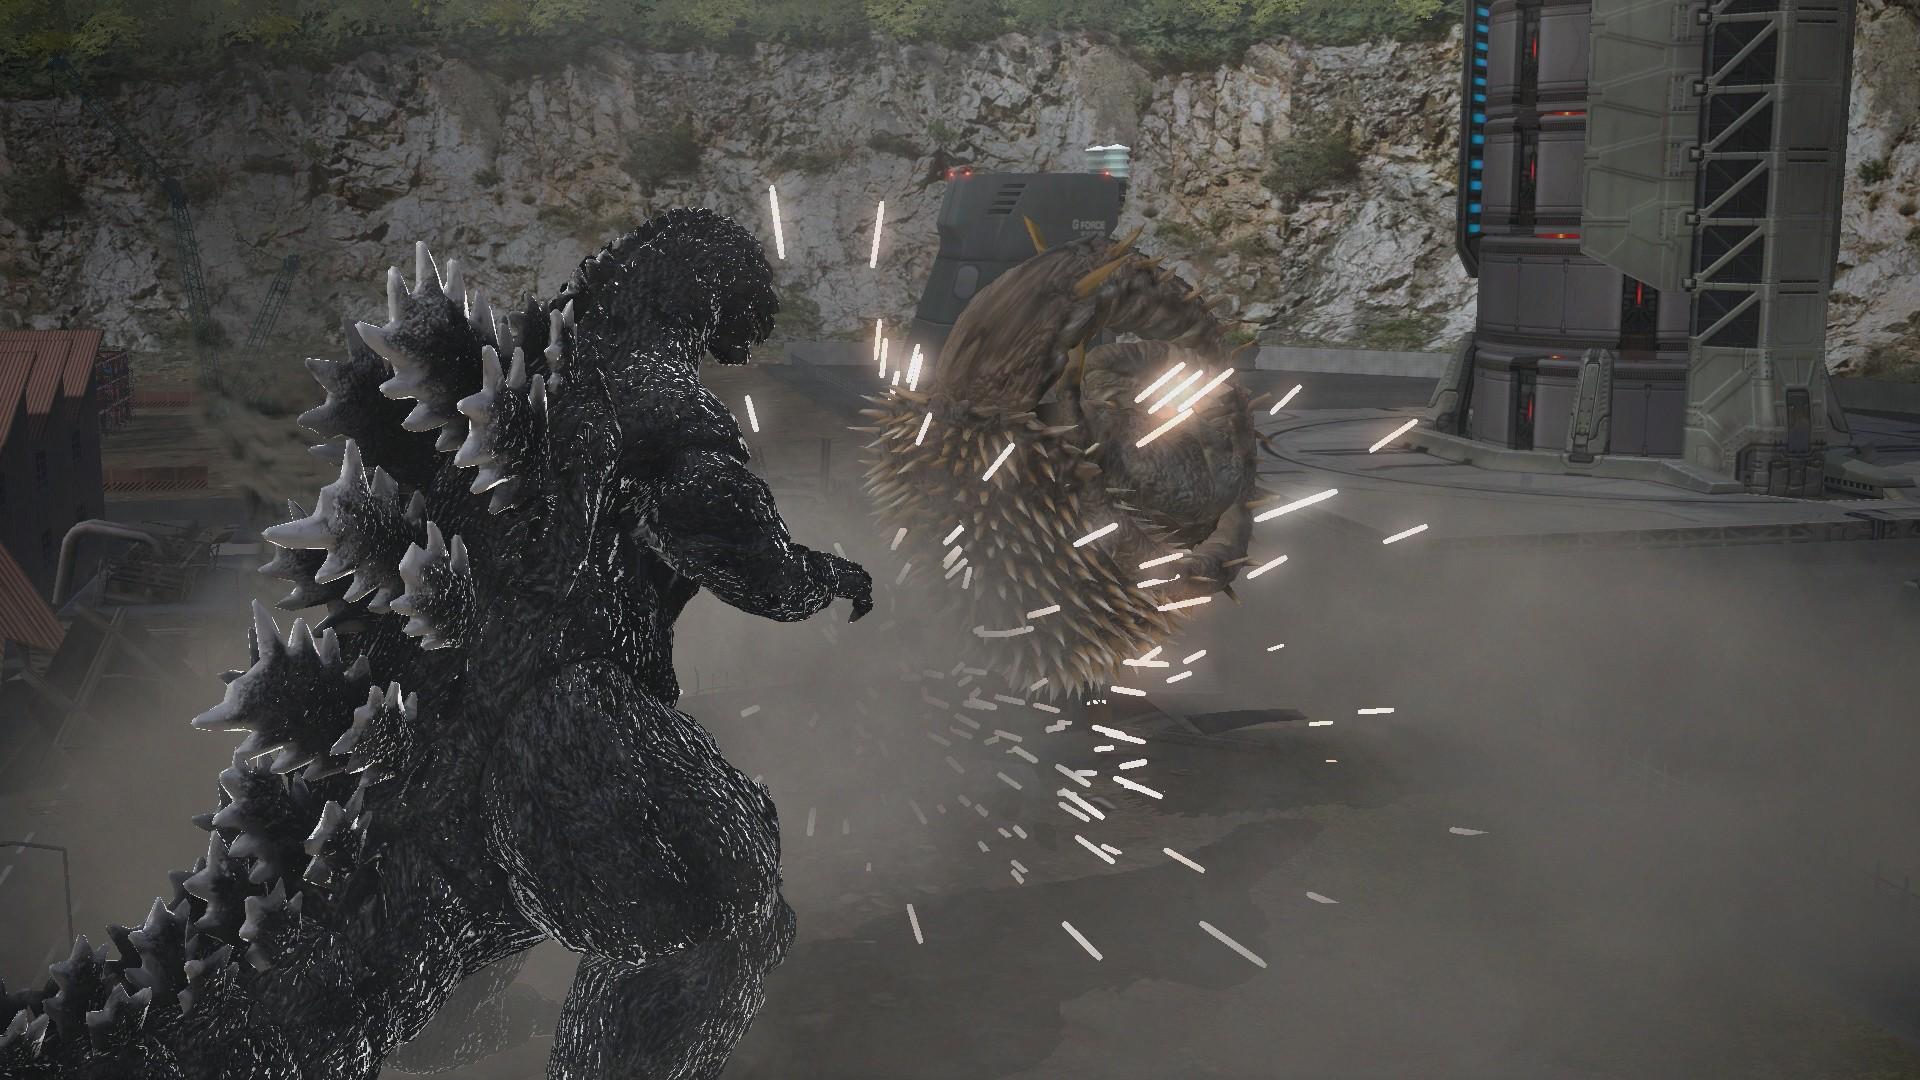 Desktop Themepack With 30 Godzilla Game Shots